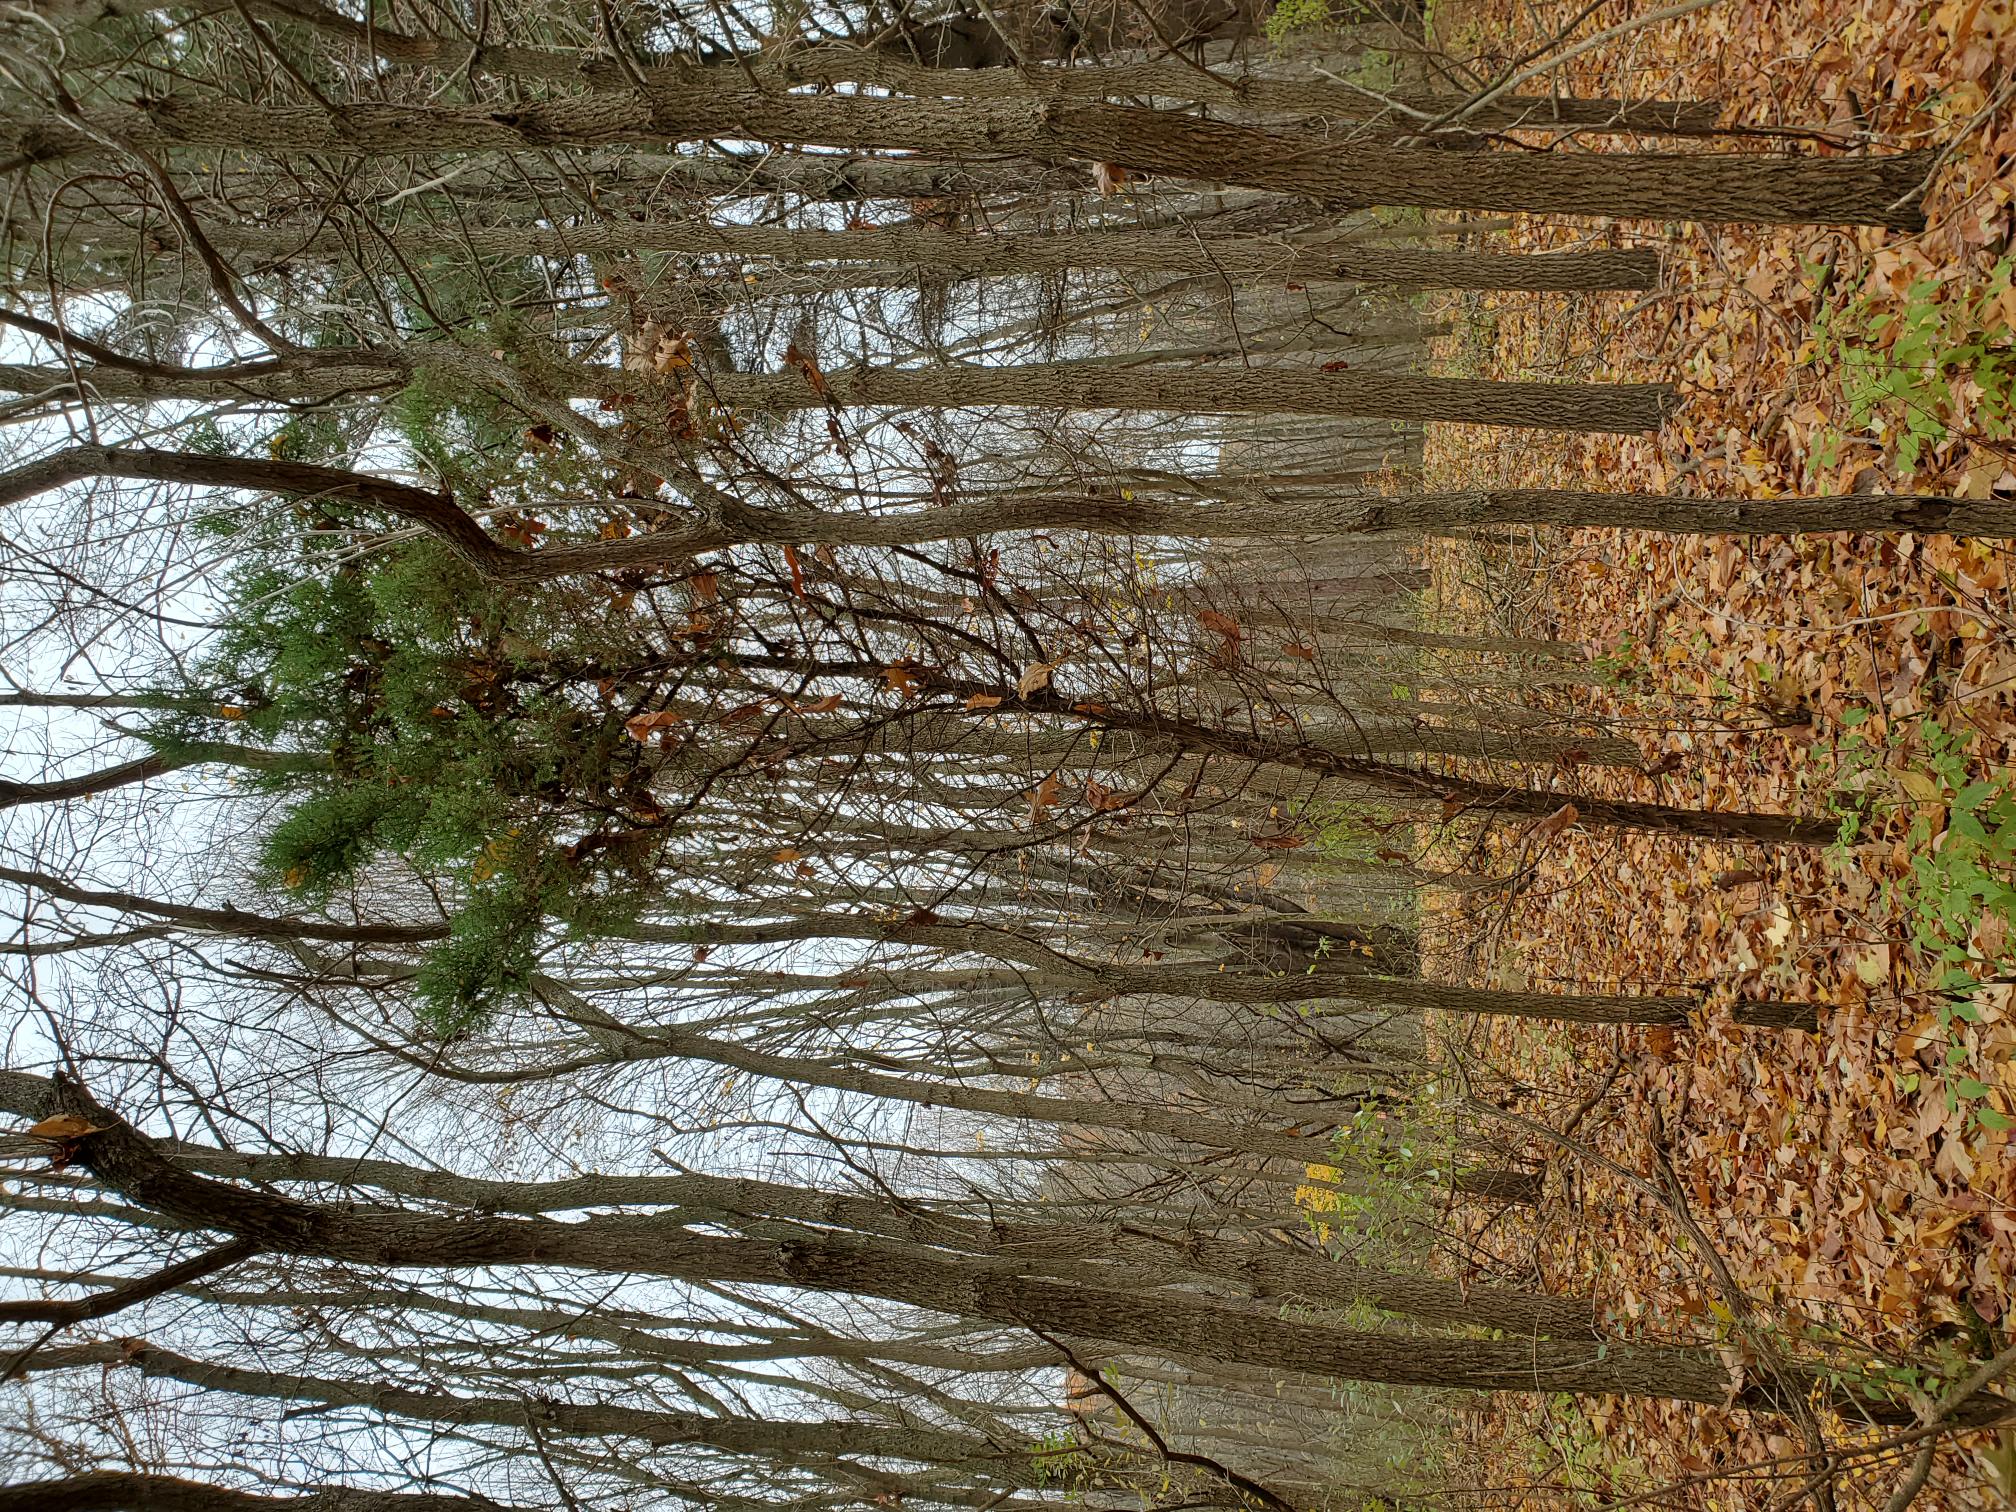 Red cedar tree example in fall woods.